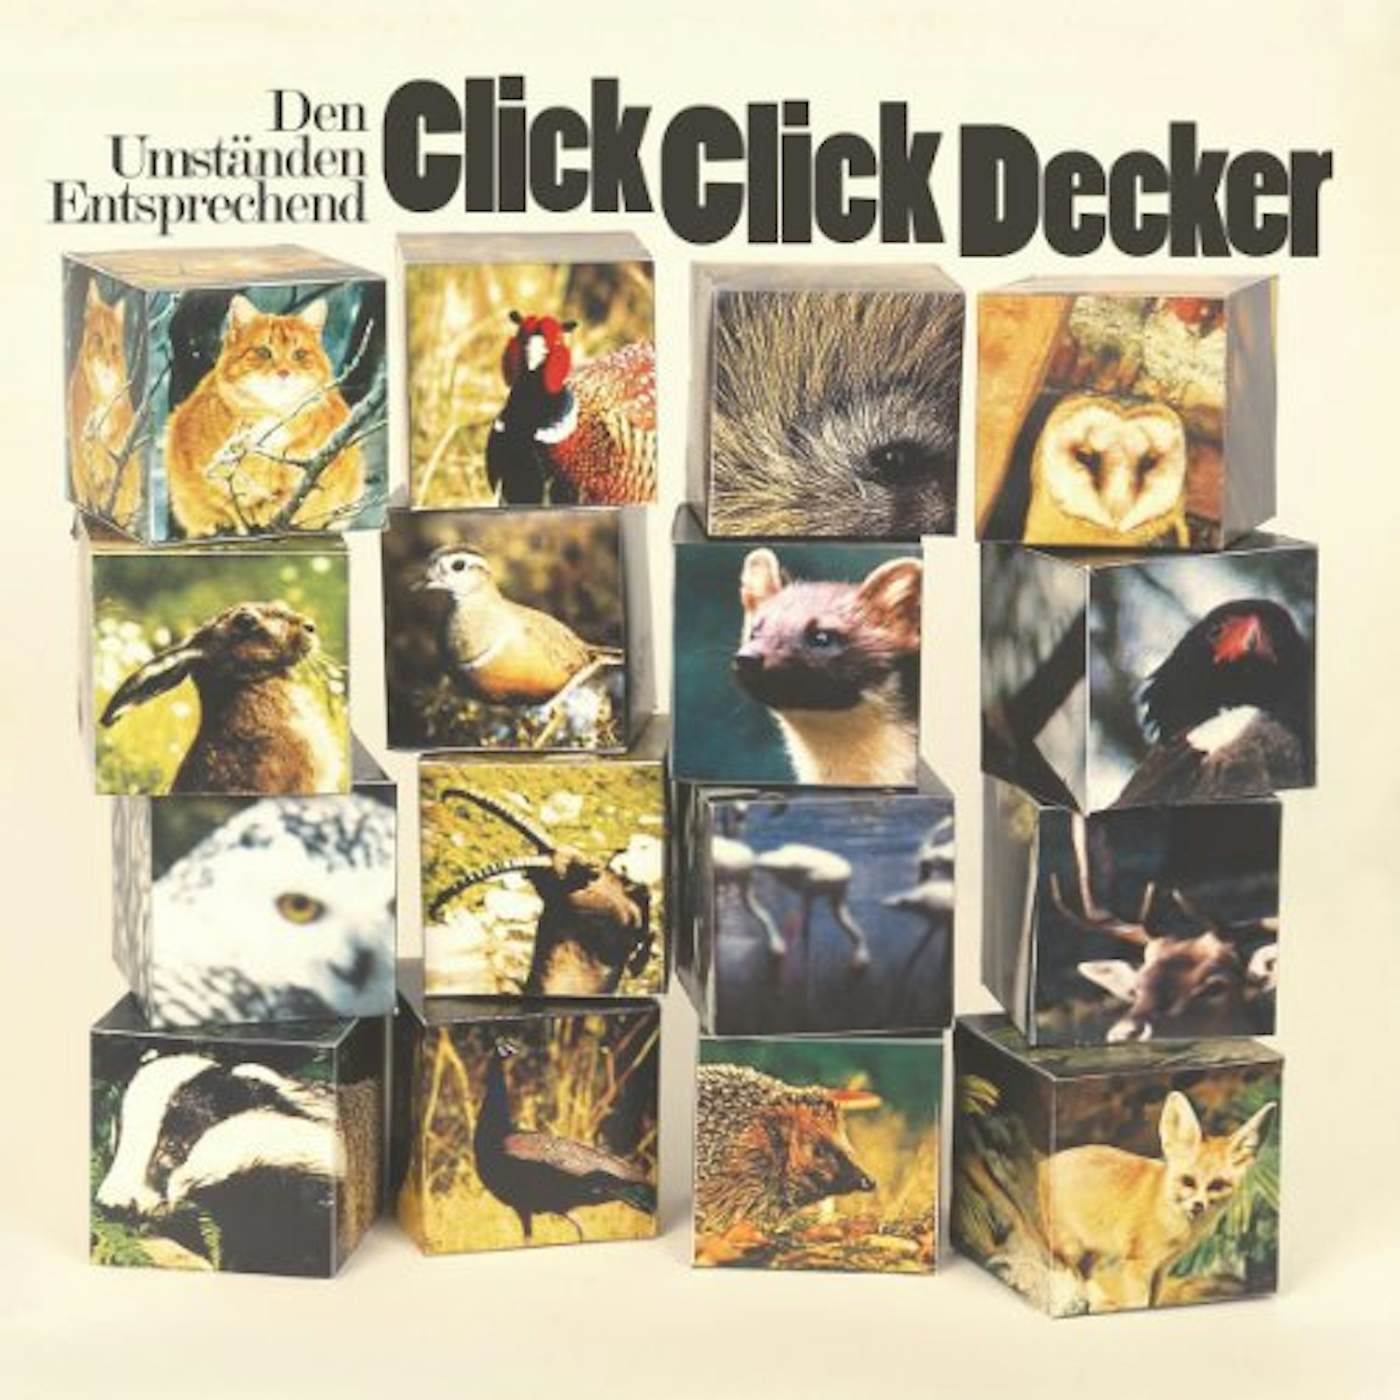 ClickClickDecker DEN UMSTAENDEN ENTSPRE Vinyl Record